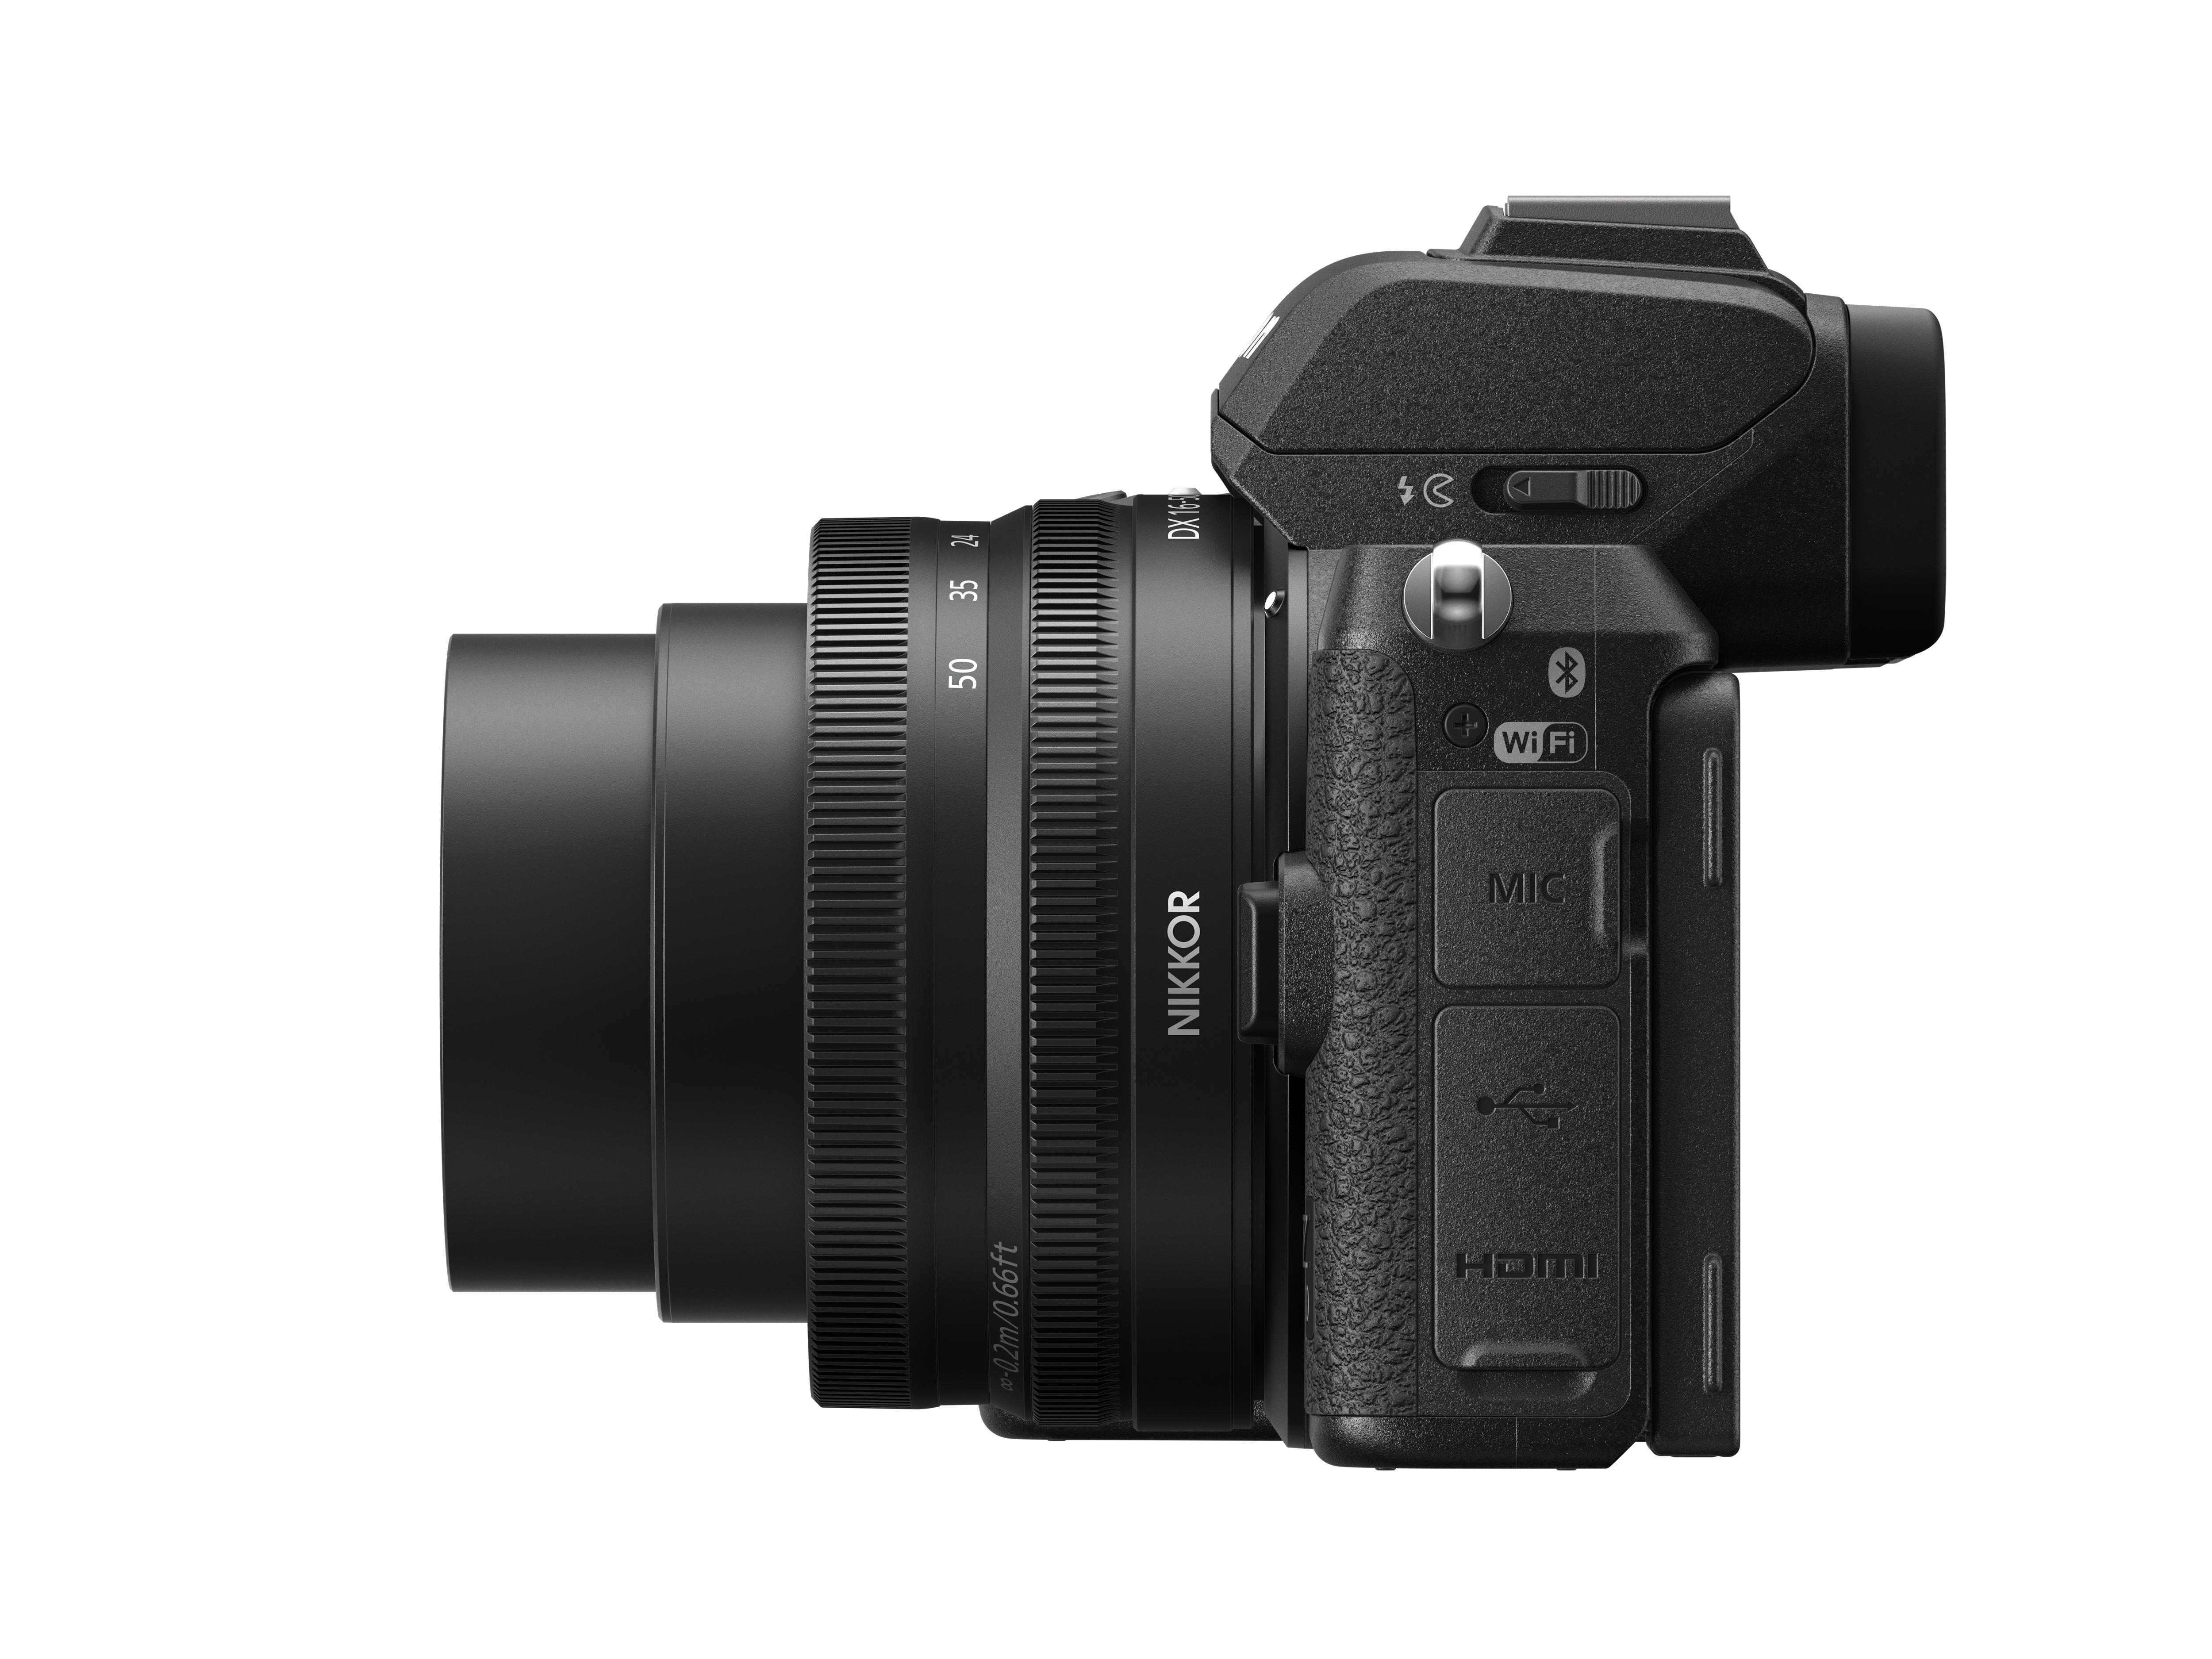 Objektiv WLAN Display 16-50 NIKON mm, Systemkamera 8 50 mit Z cm Kit Touchscreen,